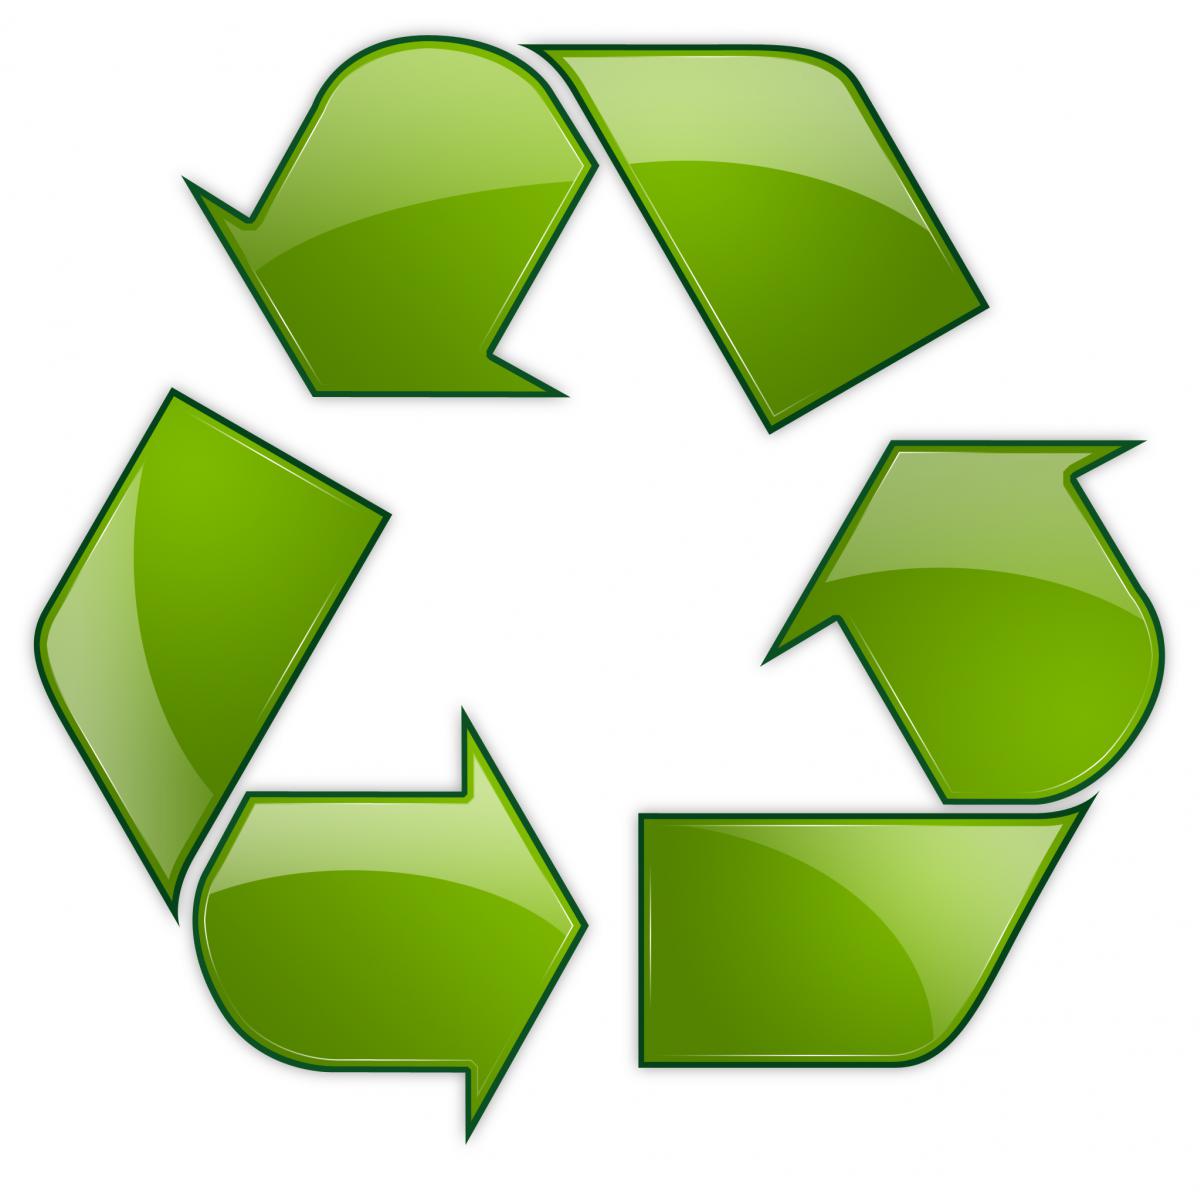 Symbole Recyclage